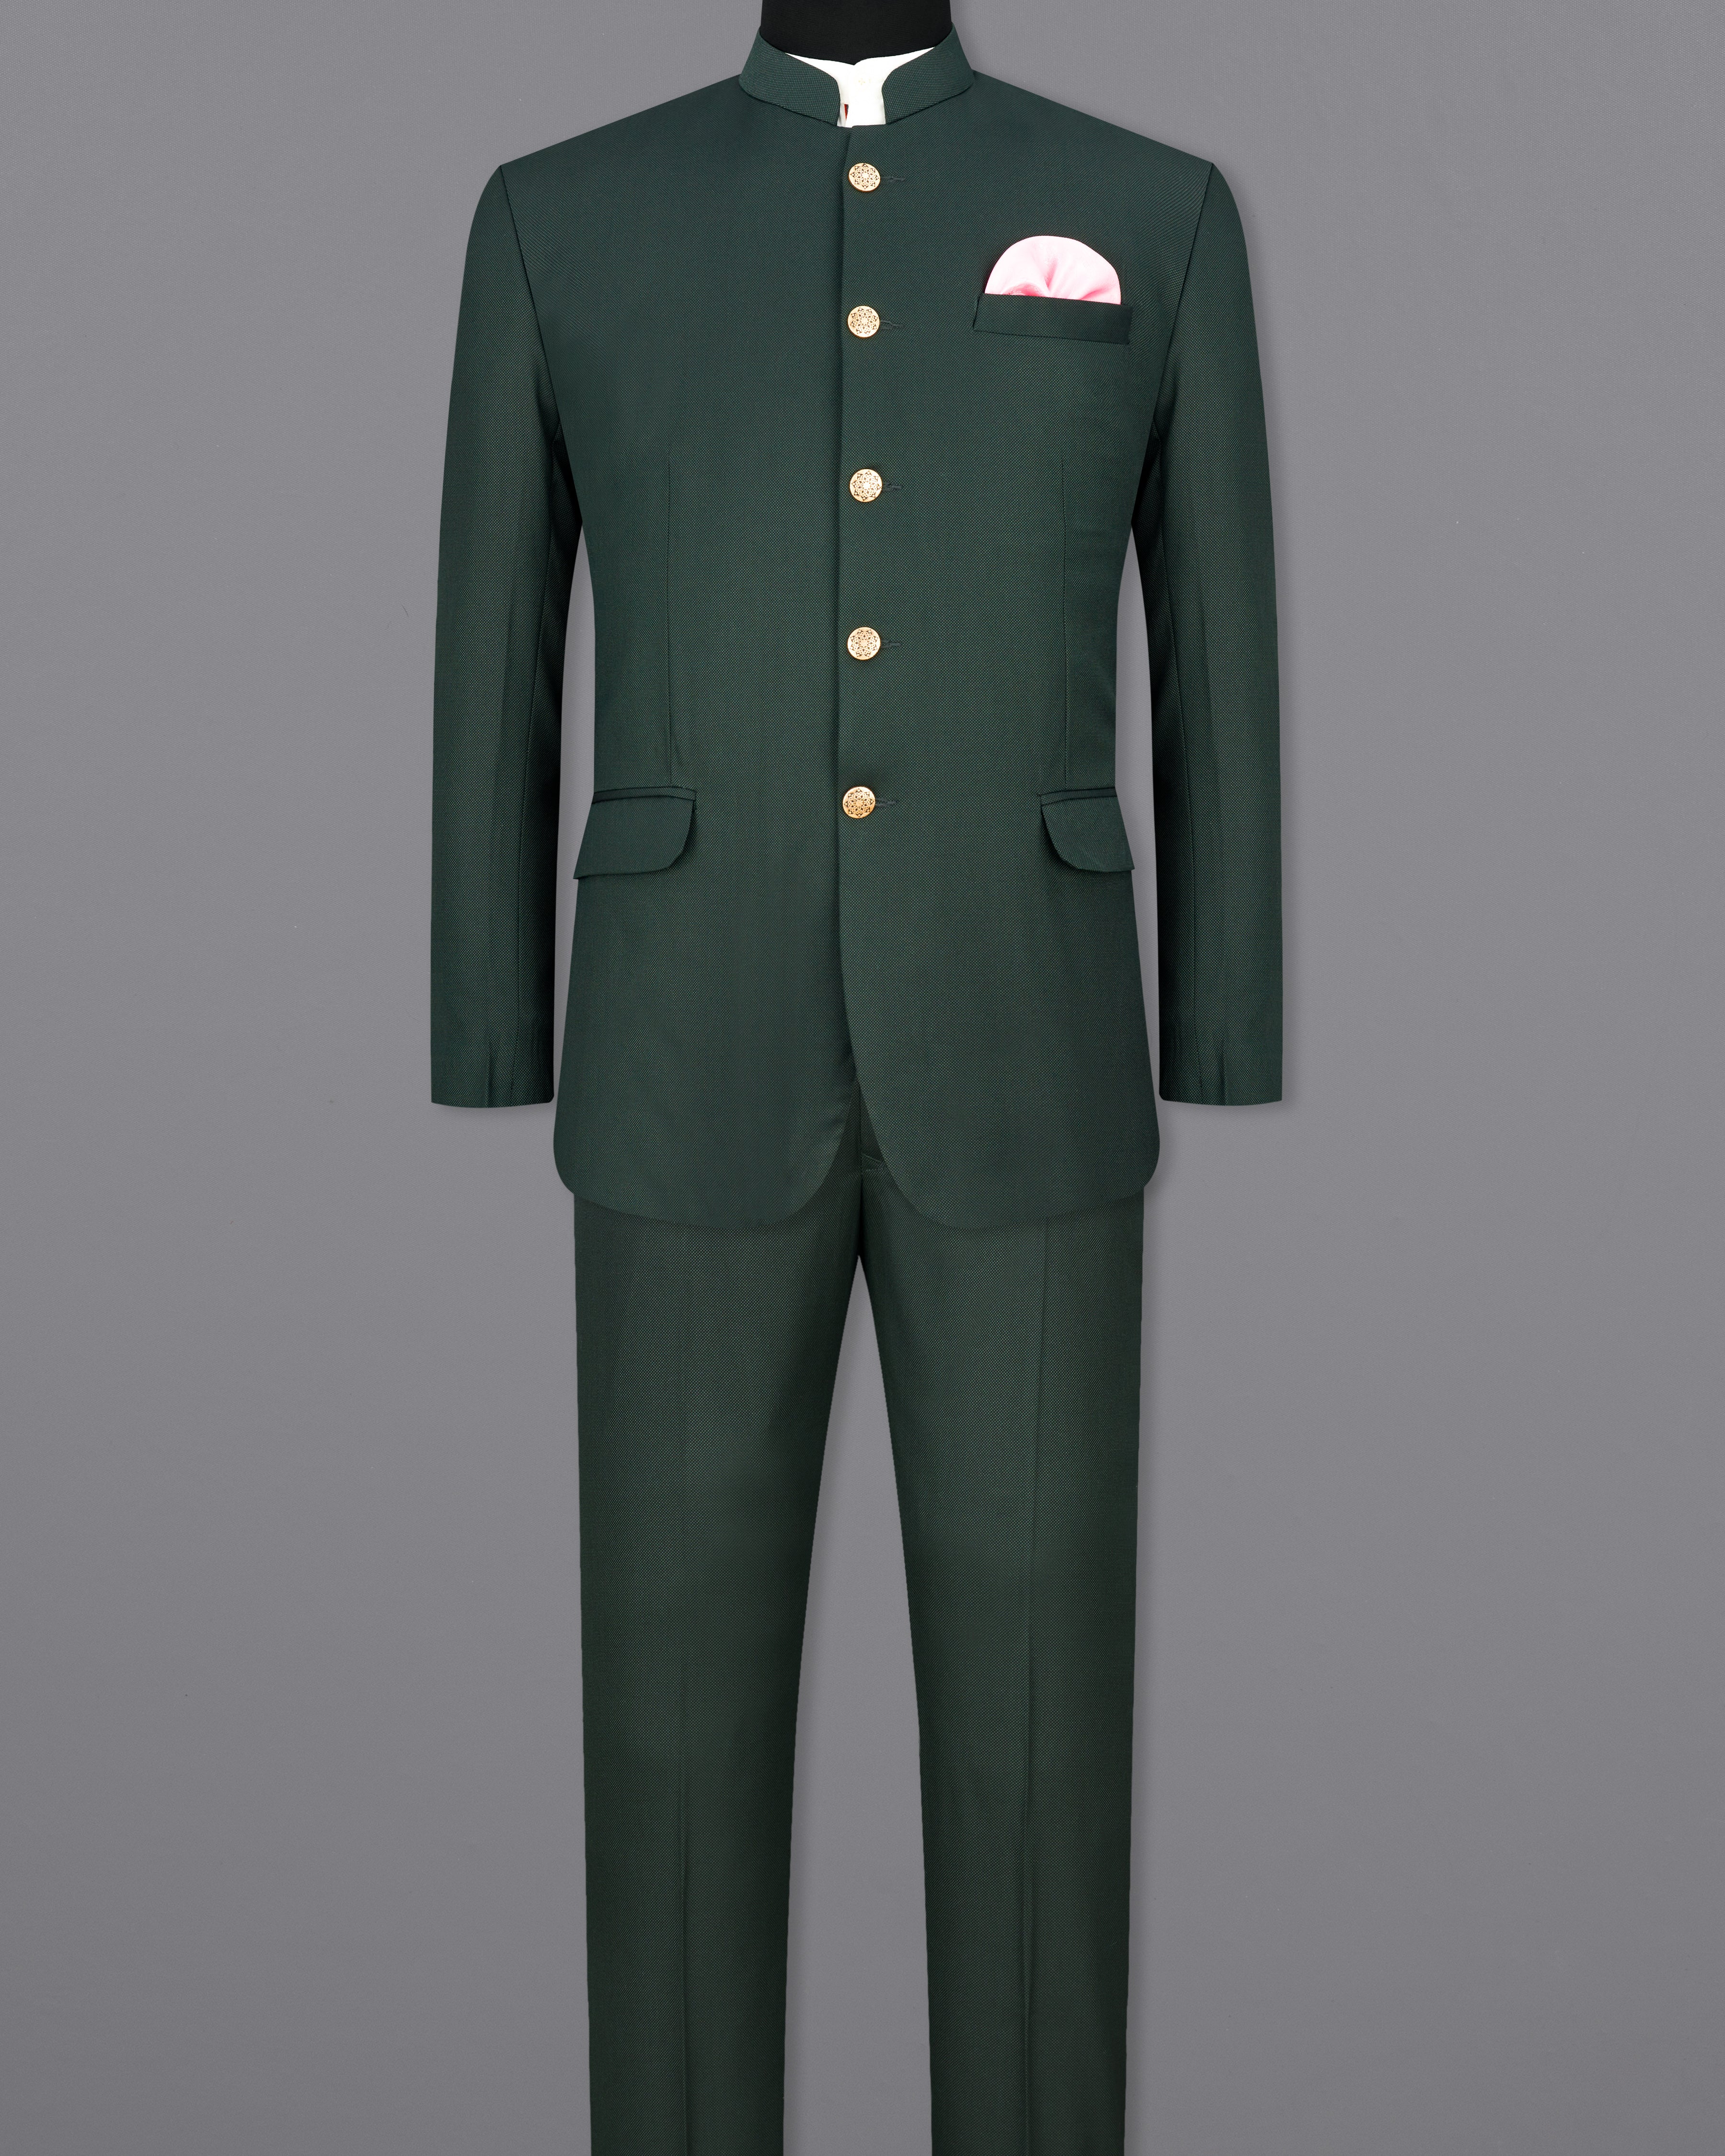 Heavy Metal Green Textured Premium Terry-Rayon Bandhgala/Jodhpuri Suits for  Men.